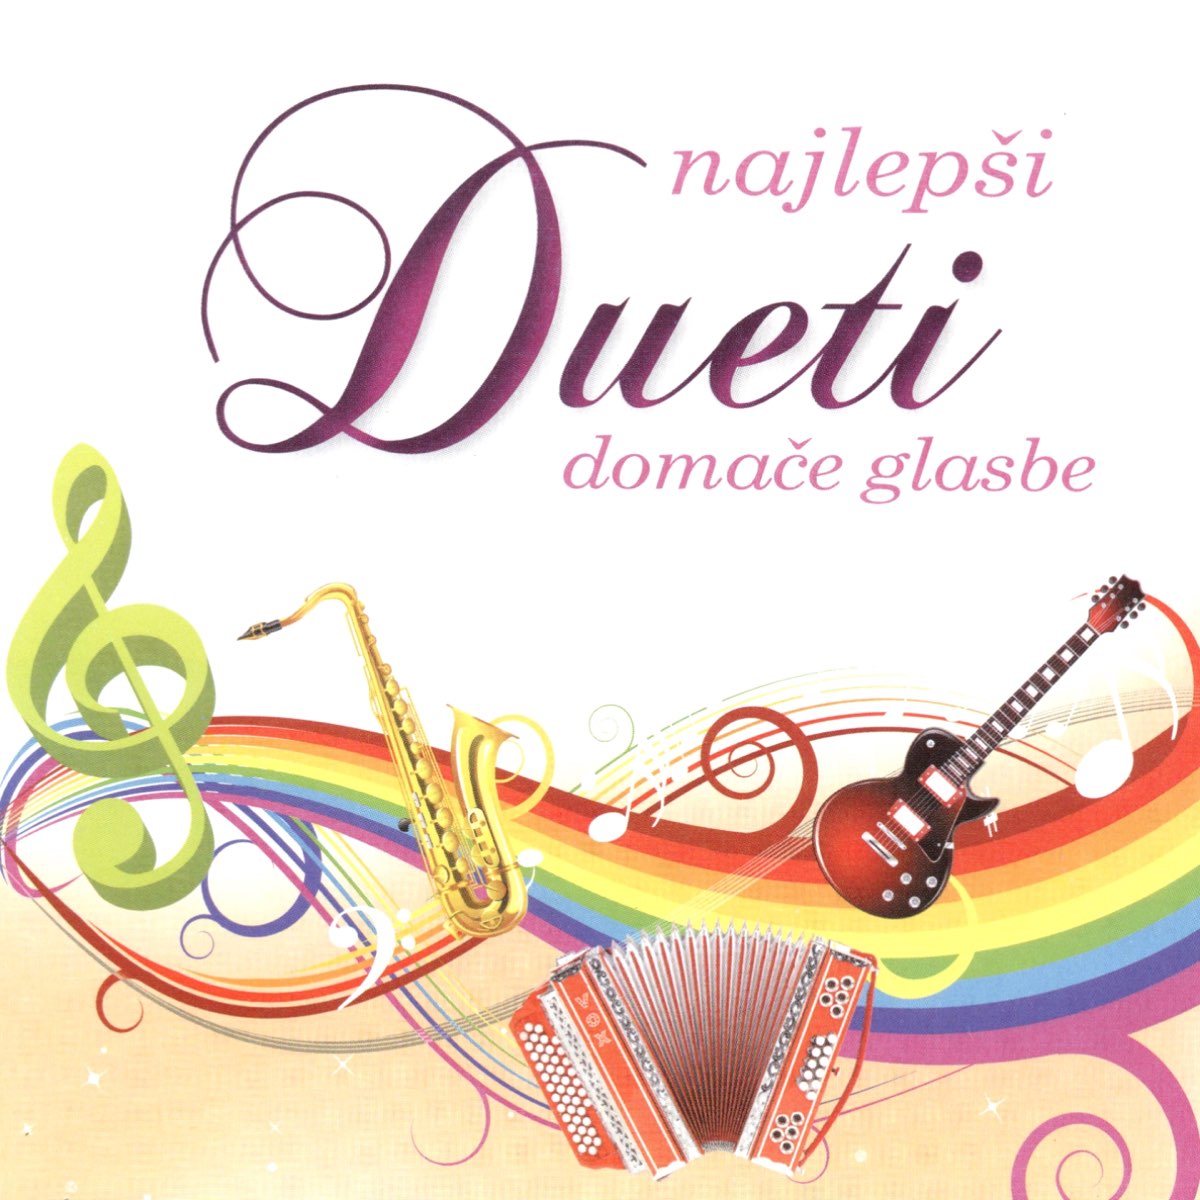 Najlepši Dueti Domače Glasbe - Album by Various Artists - Apple Music